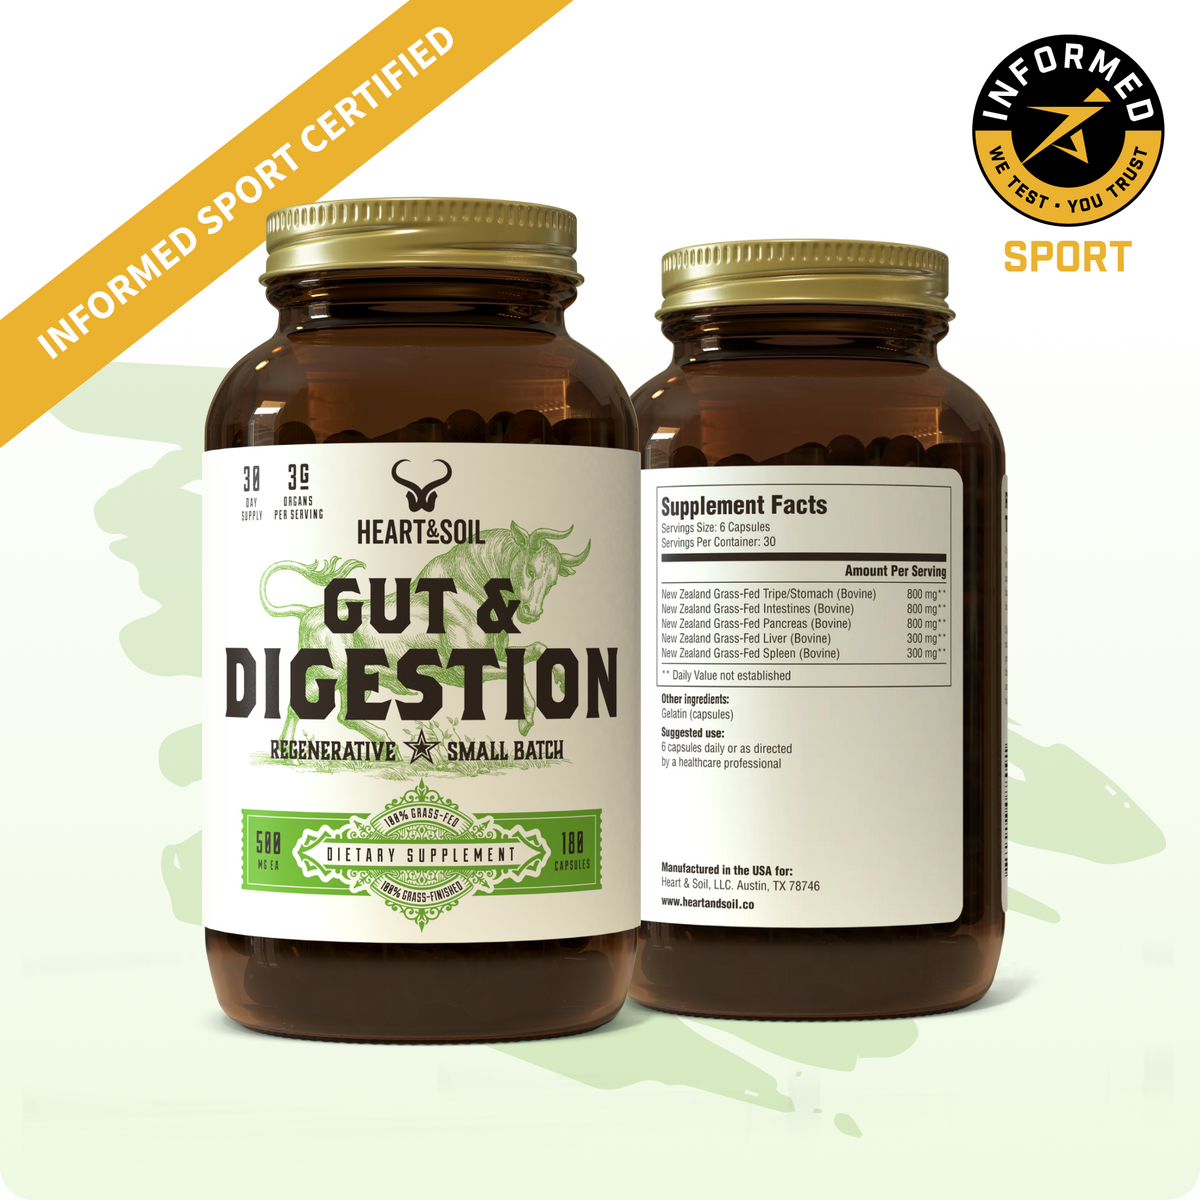 Gut & Digestion